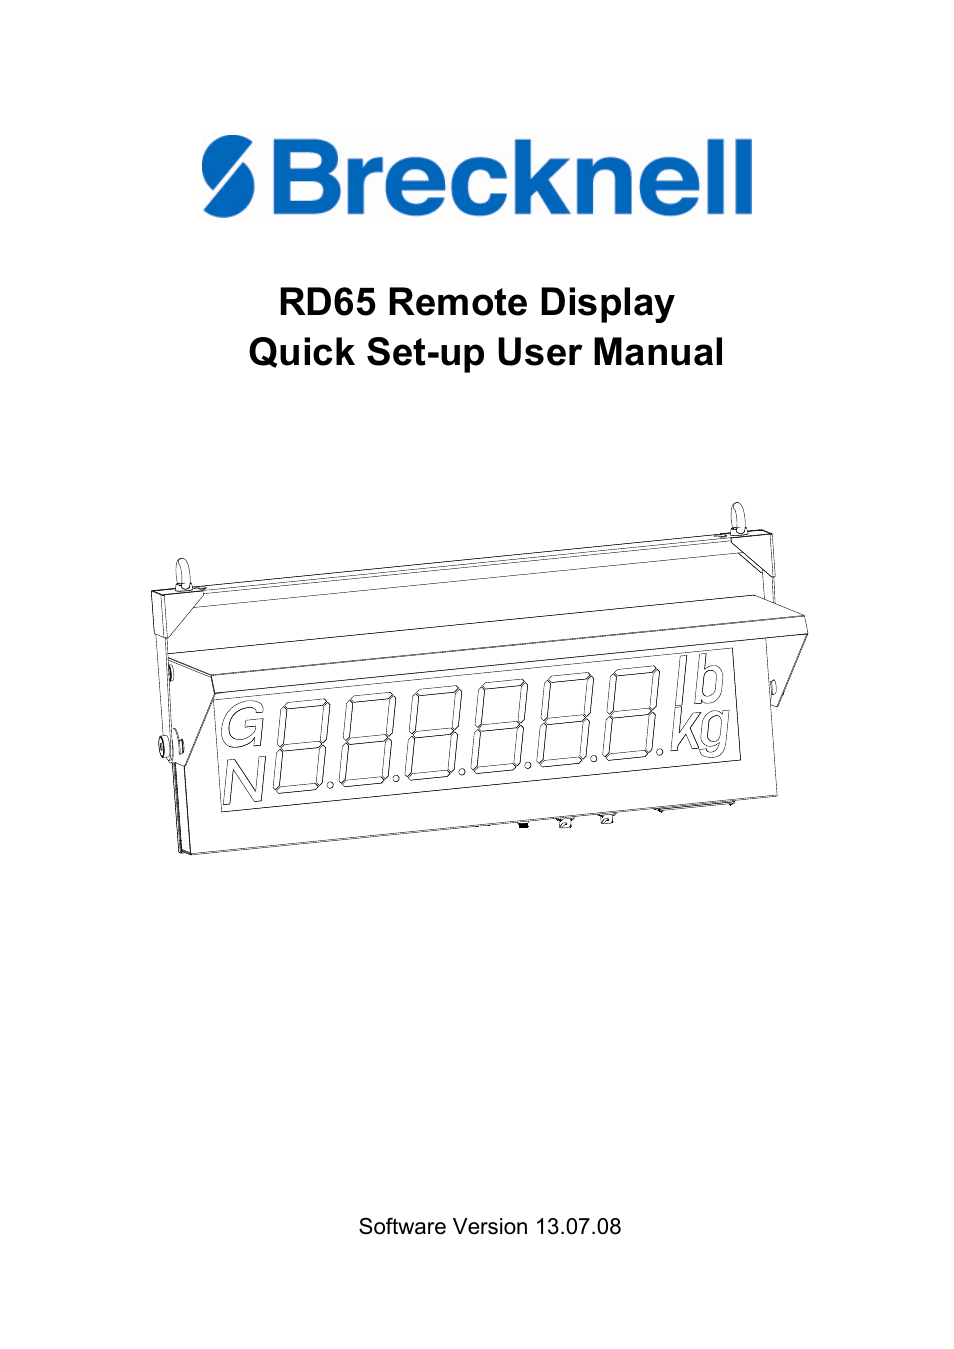 RD-65 Remote Display